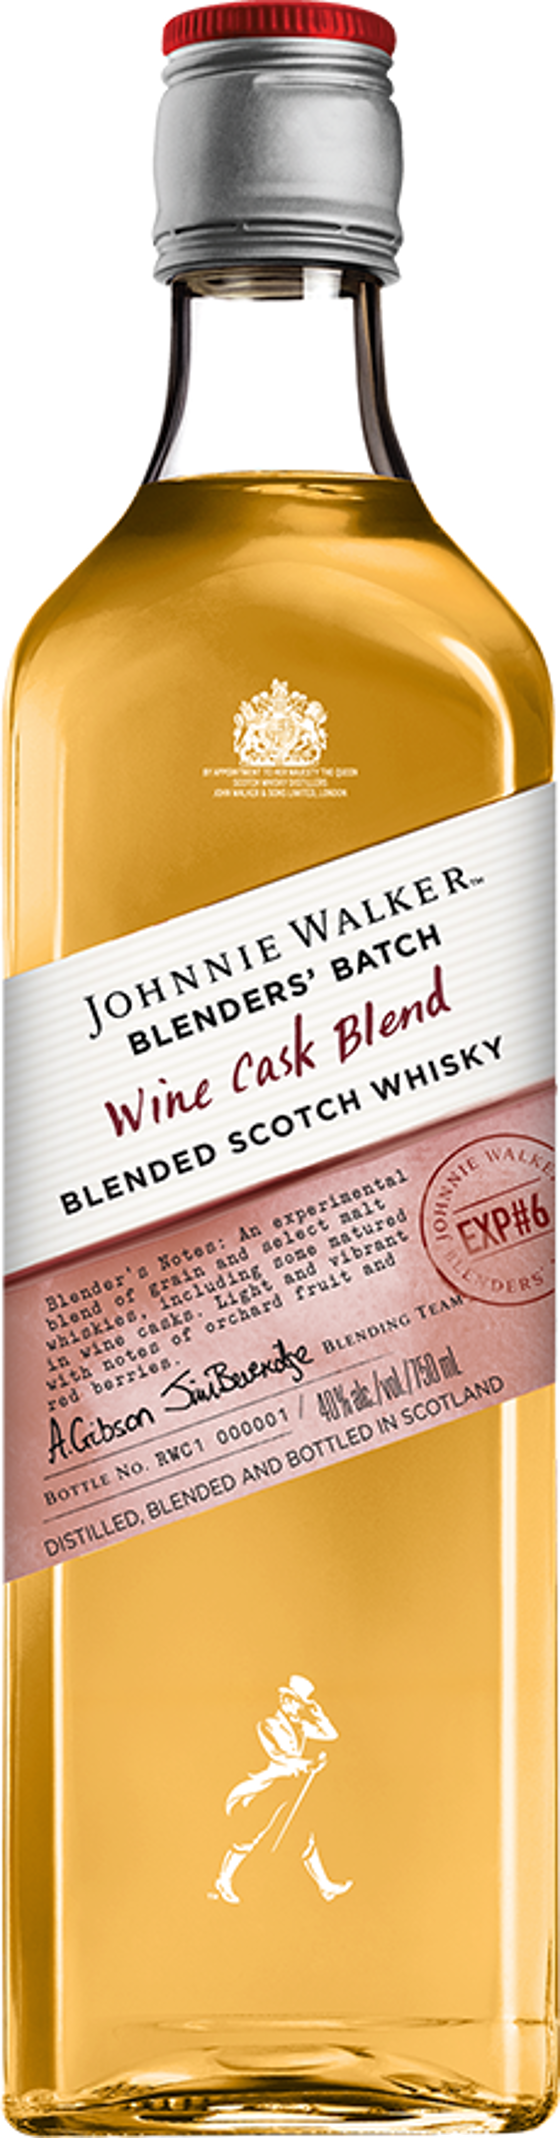 4. Johnnie Walker Wine Cask